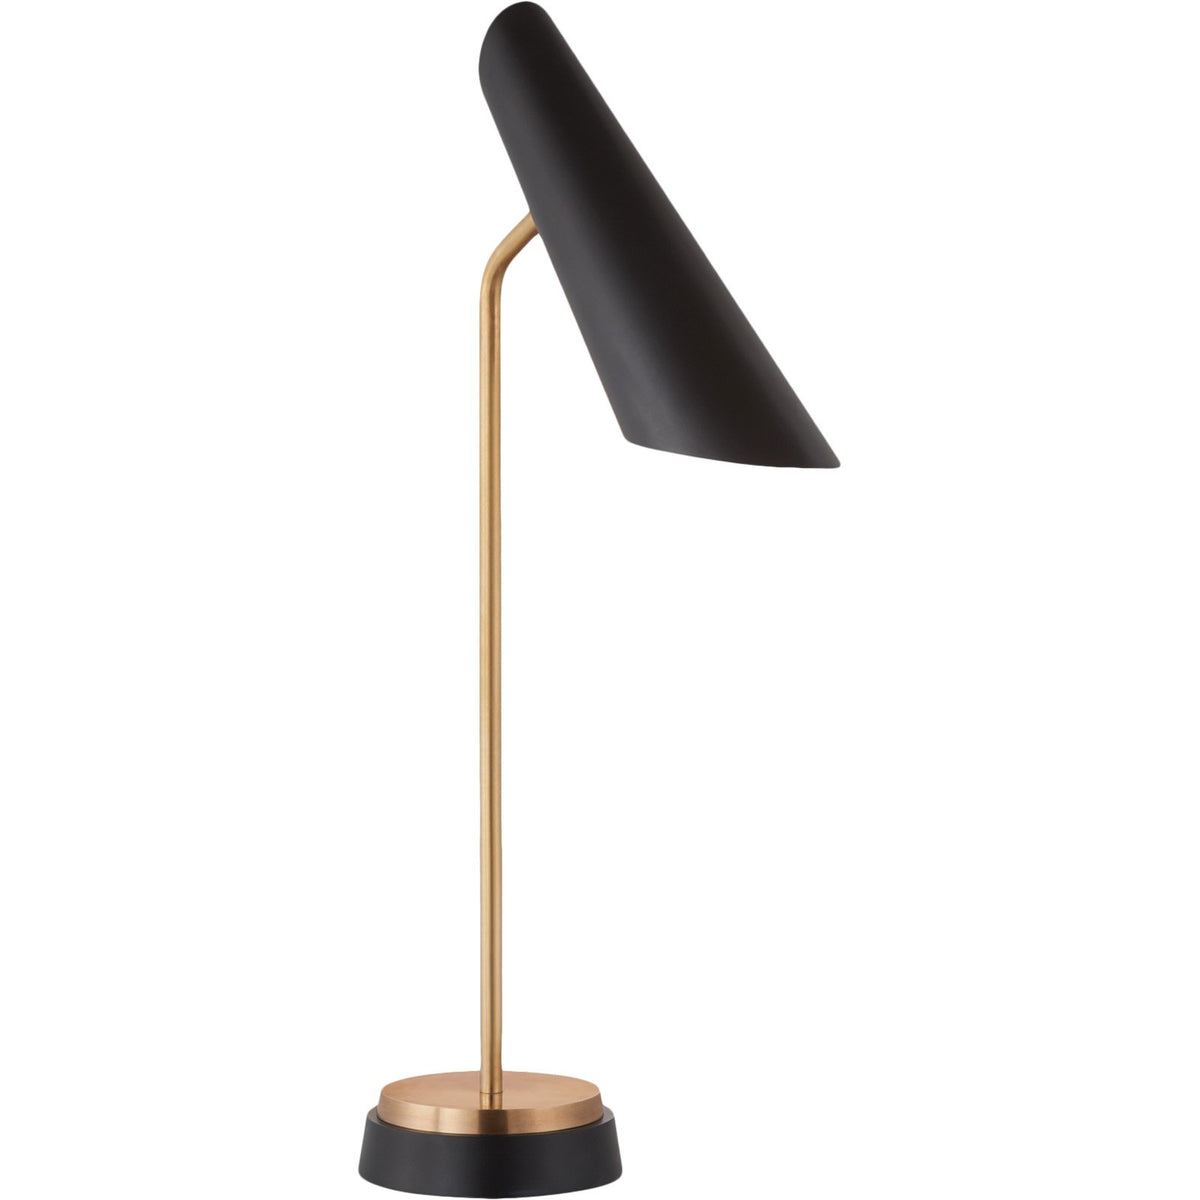 Franca Pivoting Desk Lamp